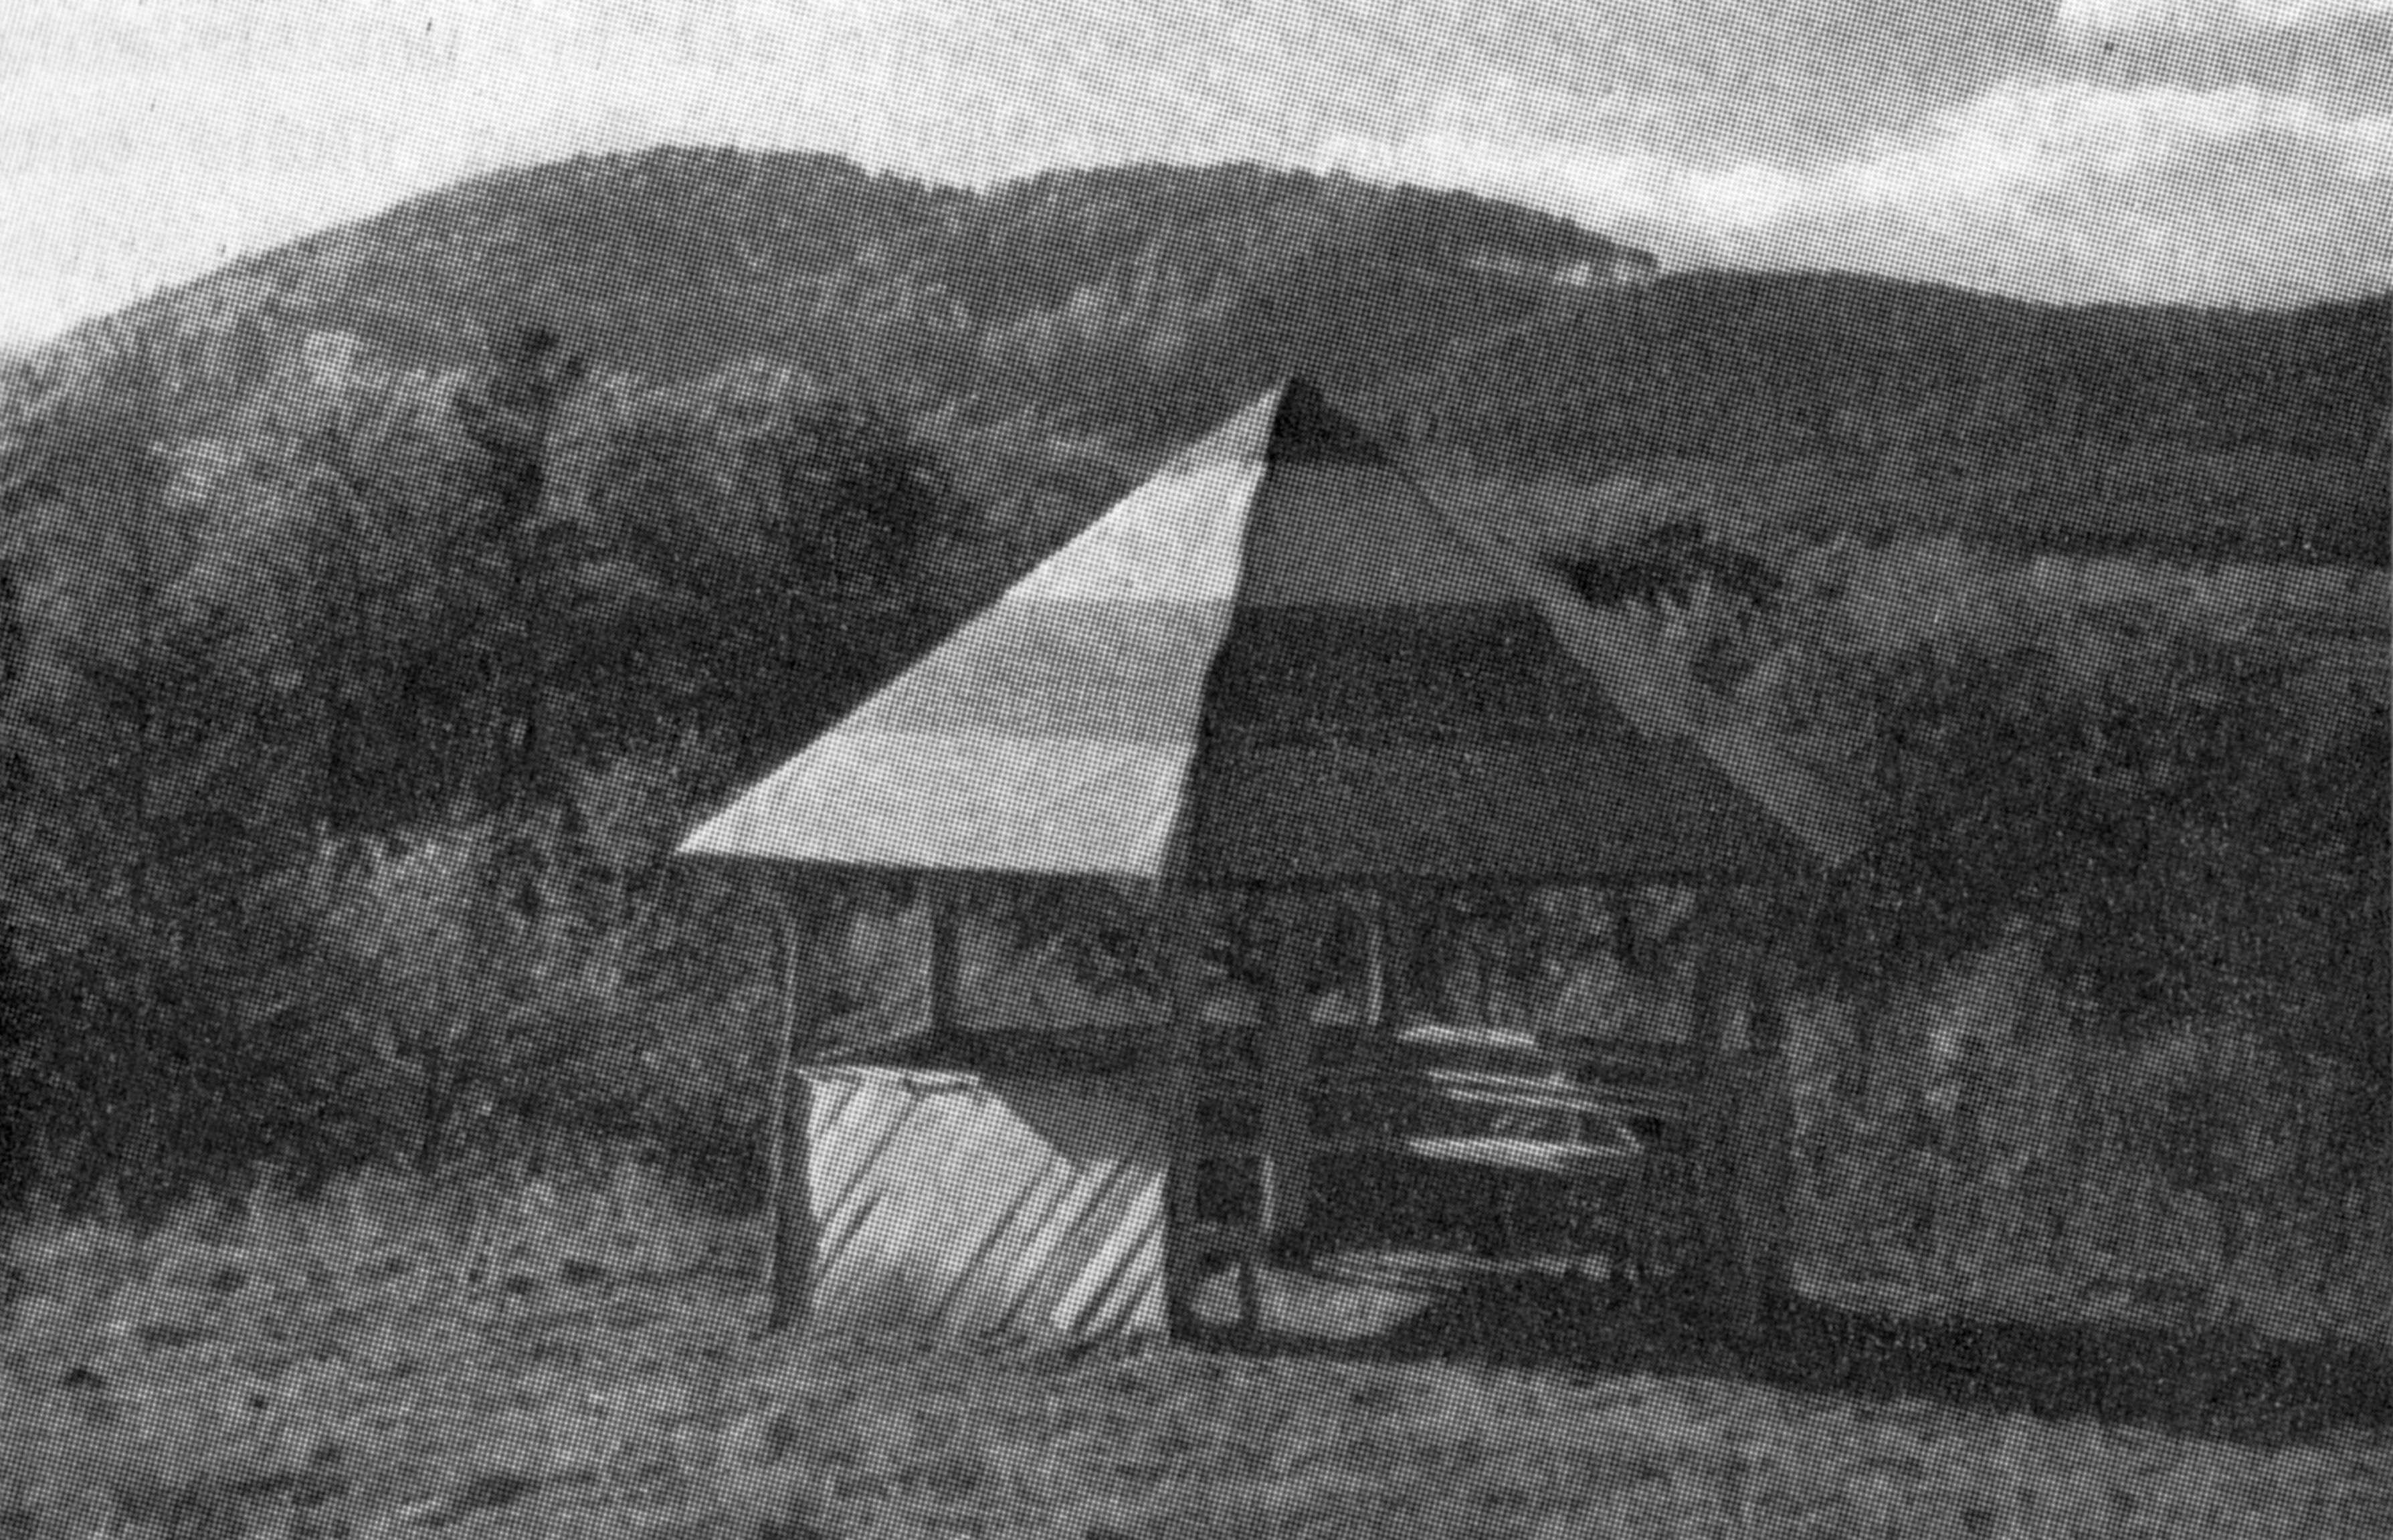 Schutzhütte am Pfeffersberge